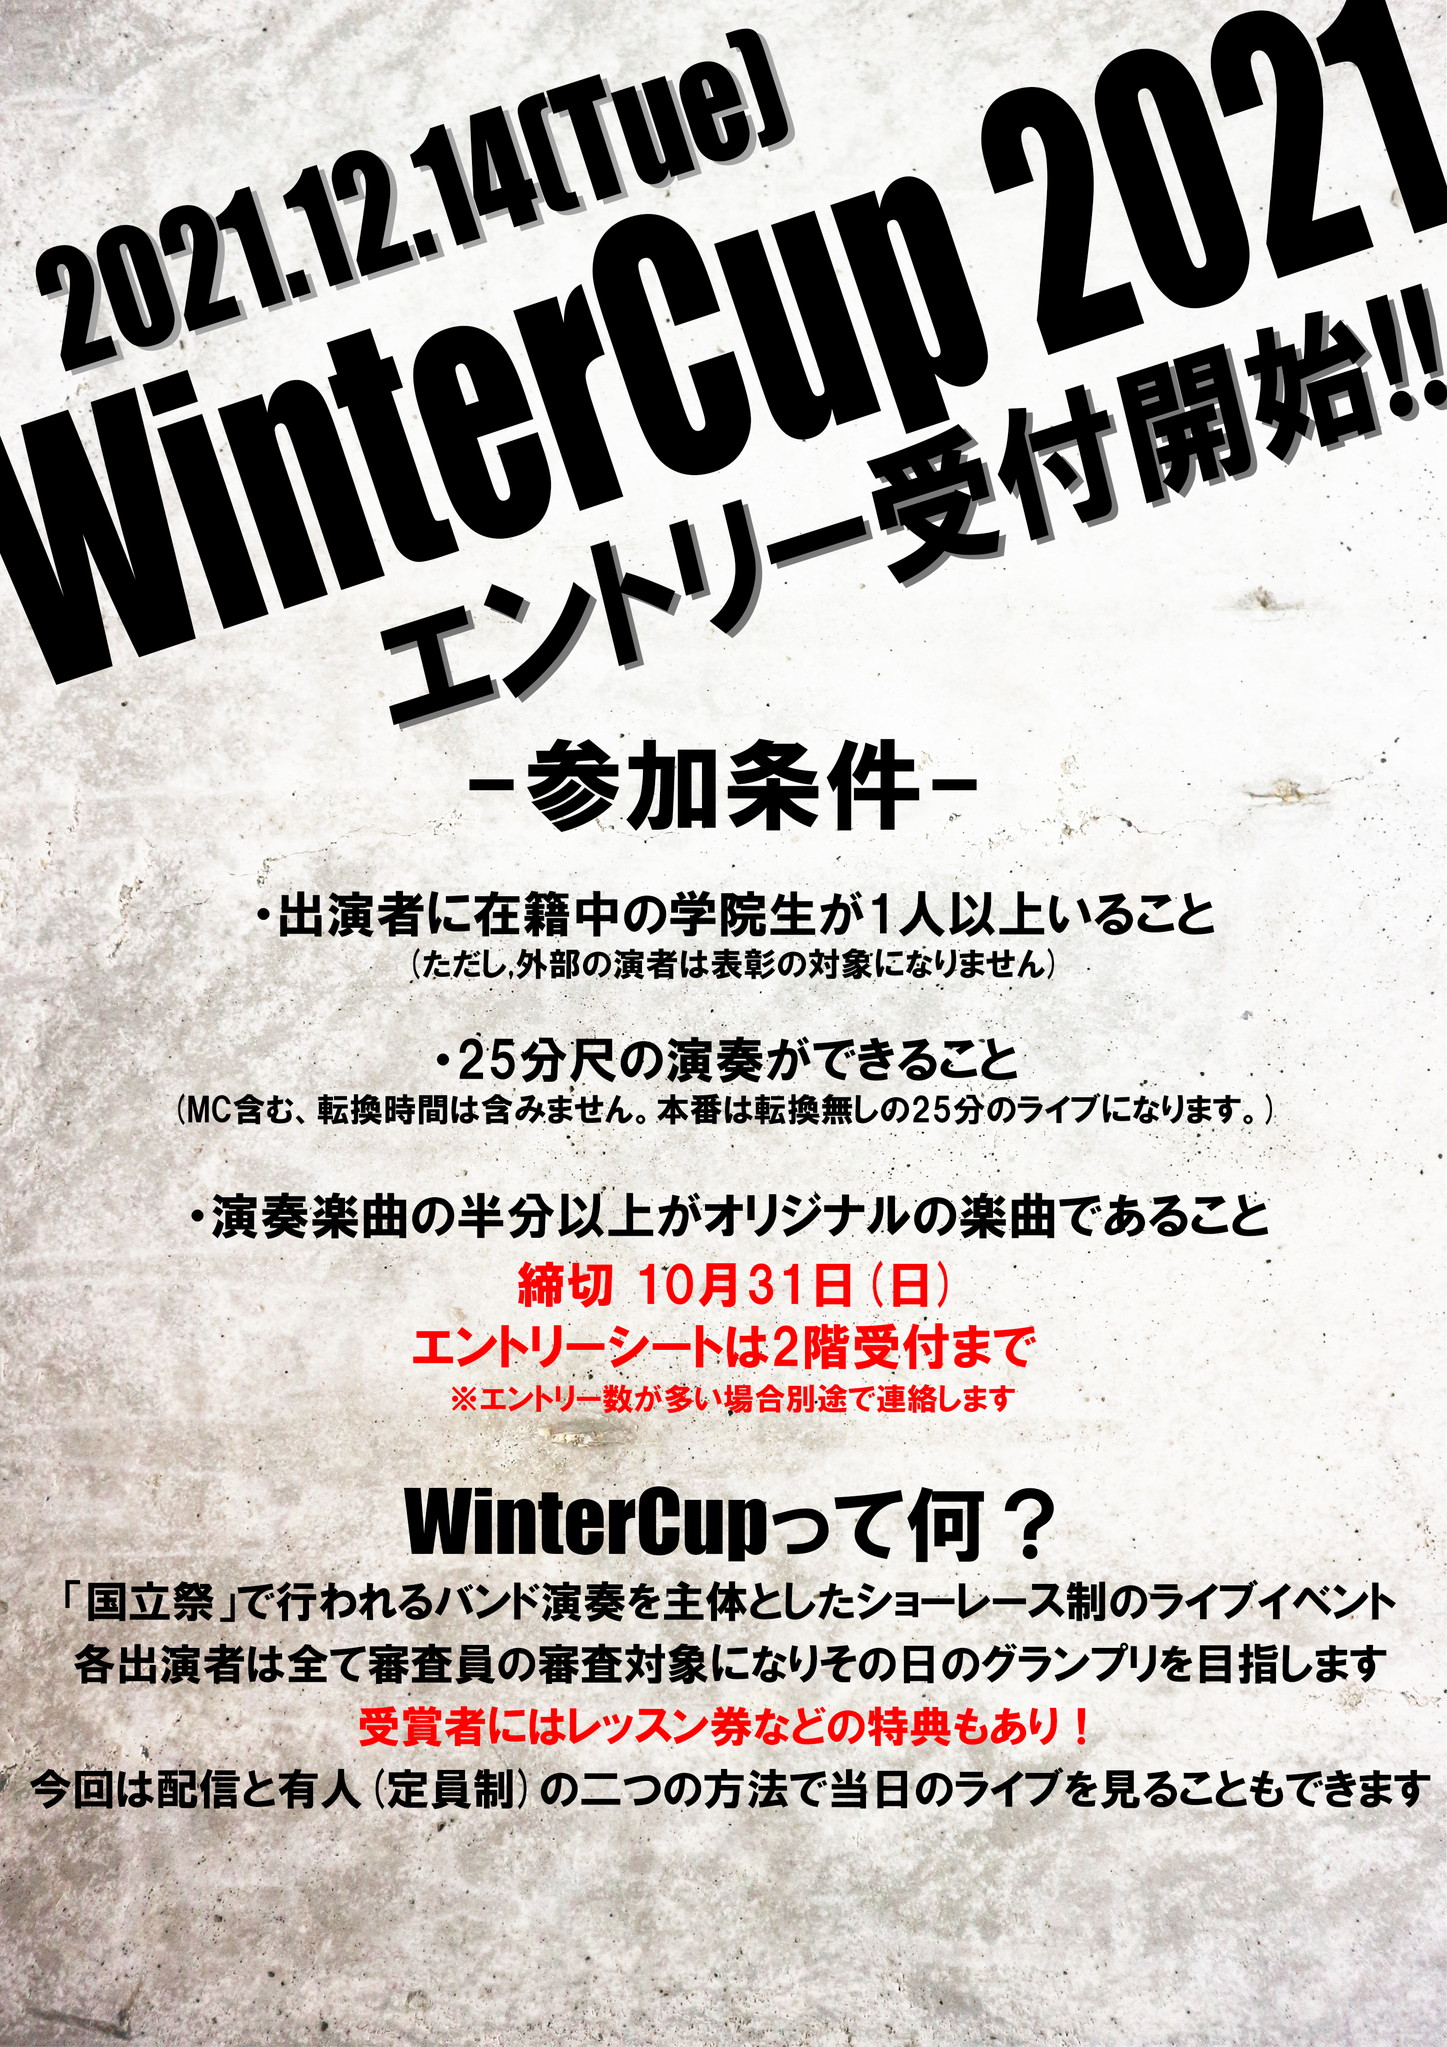 Wintercup21エントリー受付開始 東京の音楽学校 音楽専門学校 国立音楽院 くにたちおんがくいん